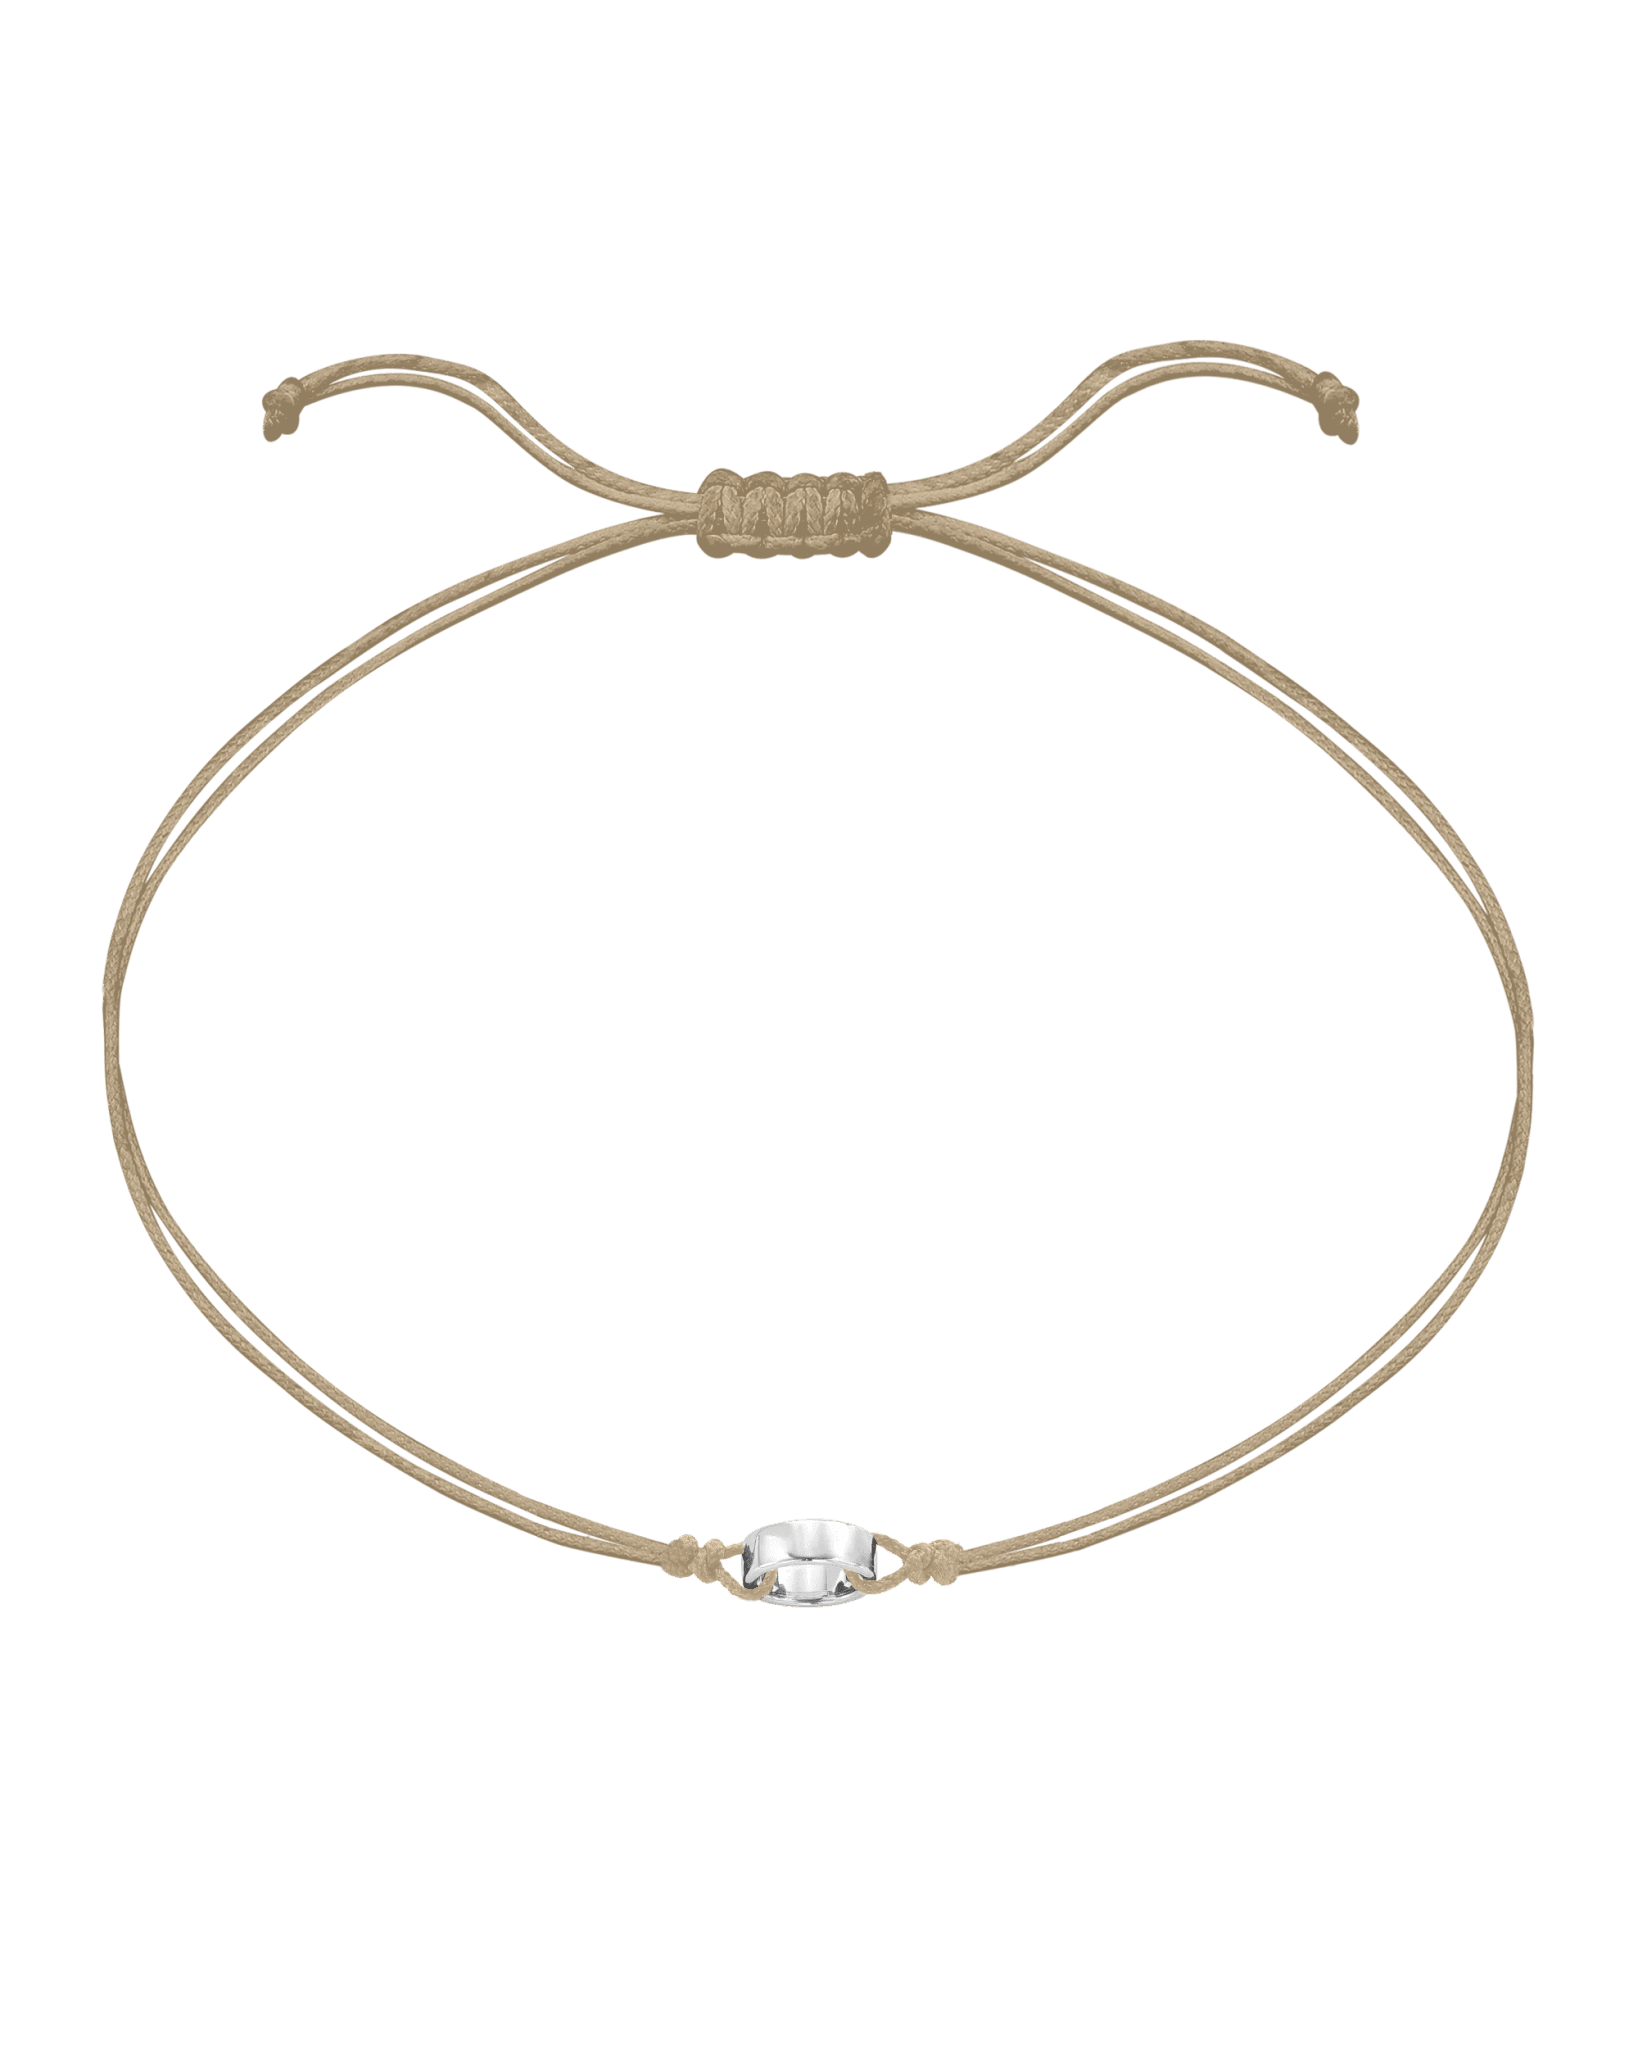 Engravable Links of Love - 14K White Gold Bracelets magal-dev 1 Beige 